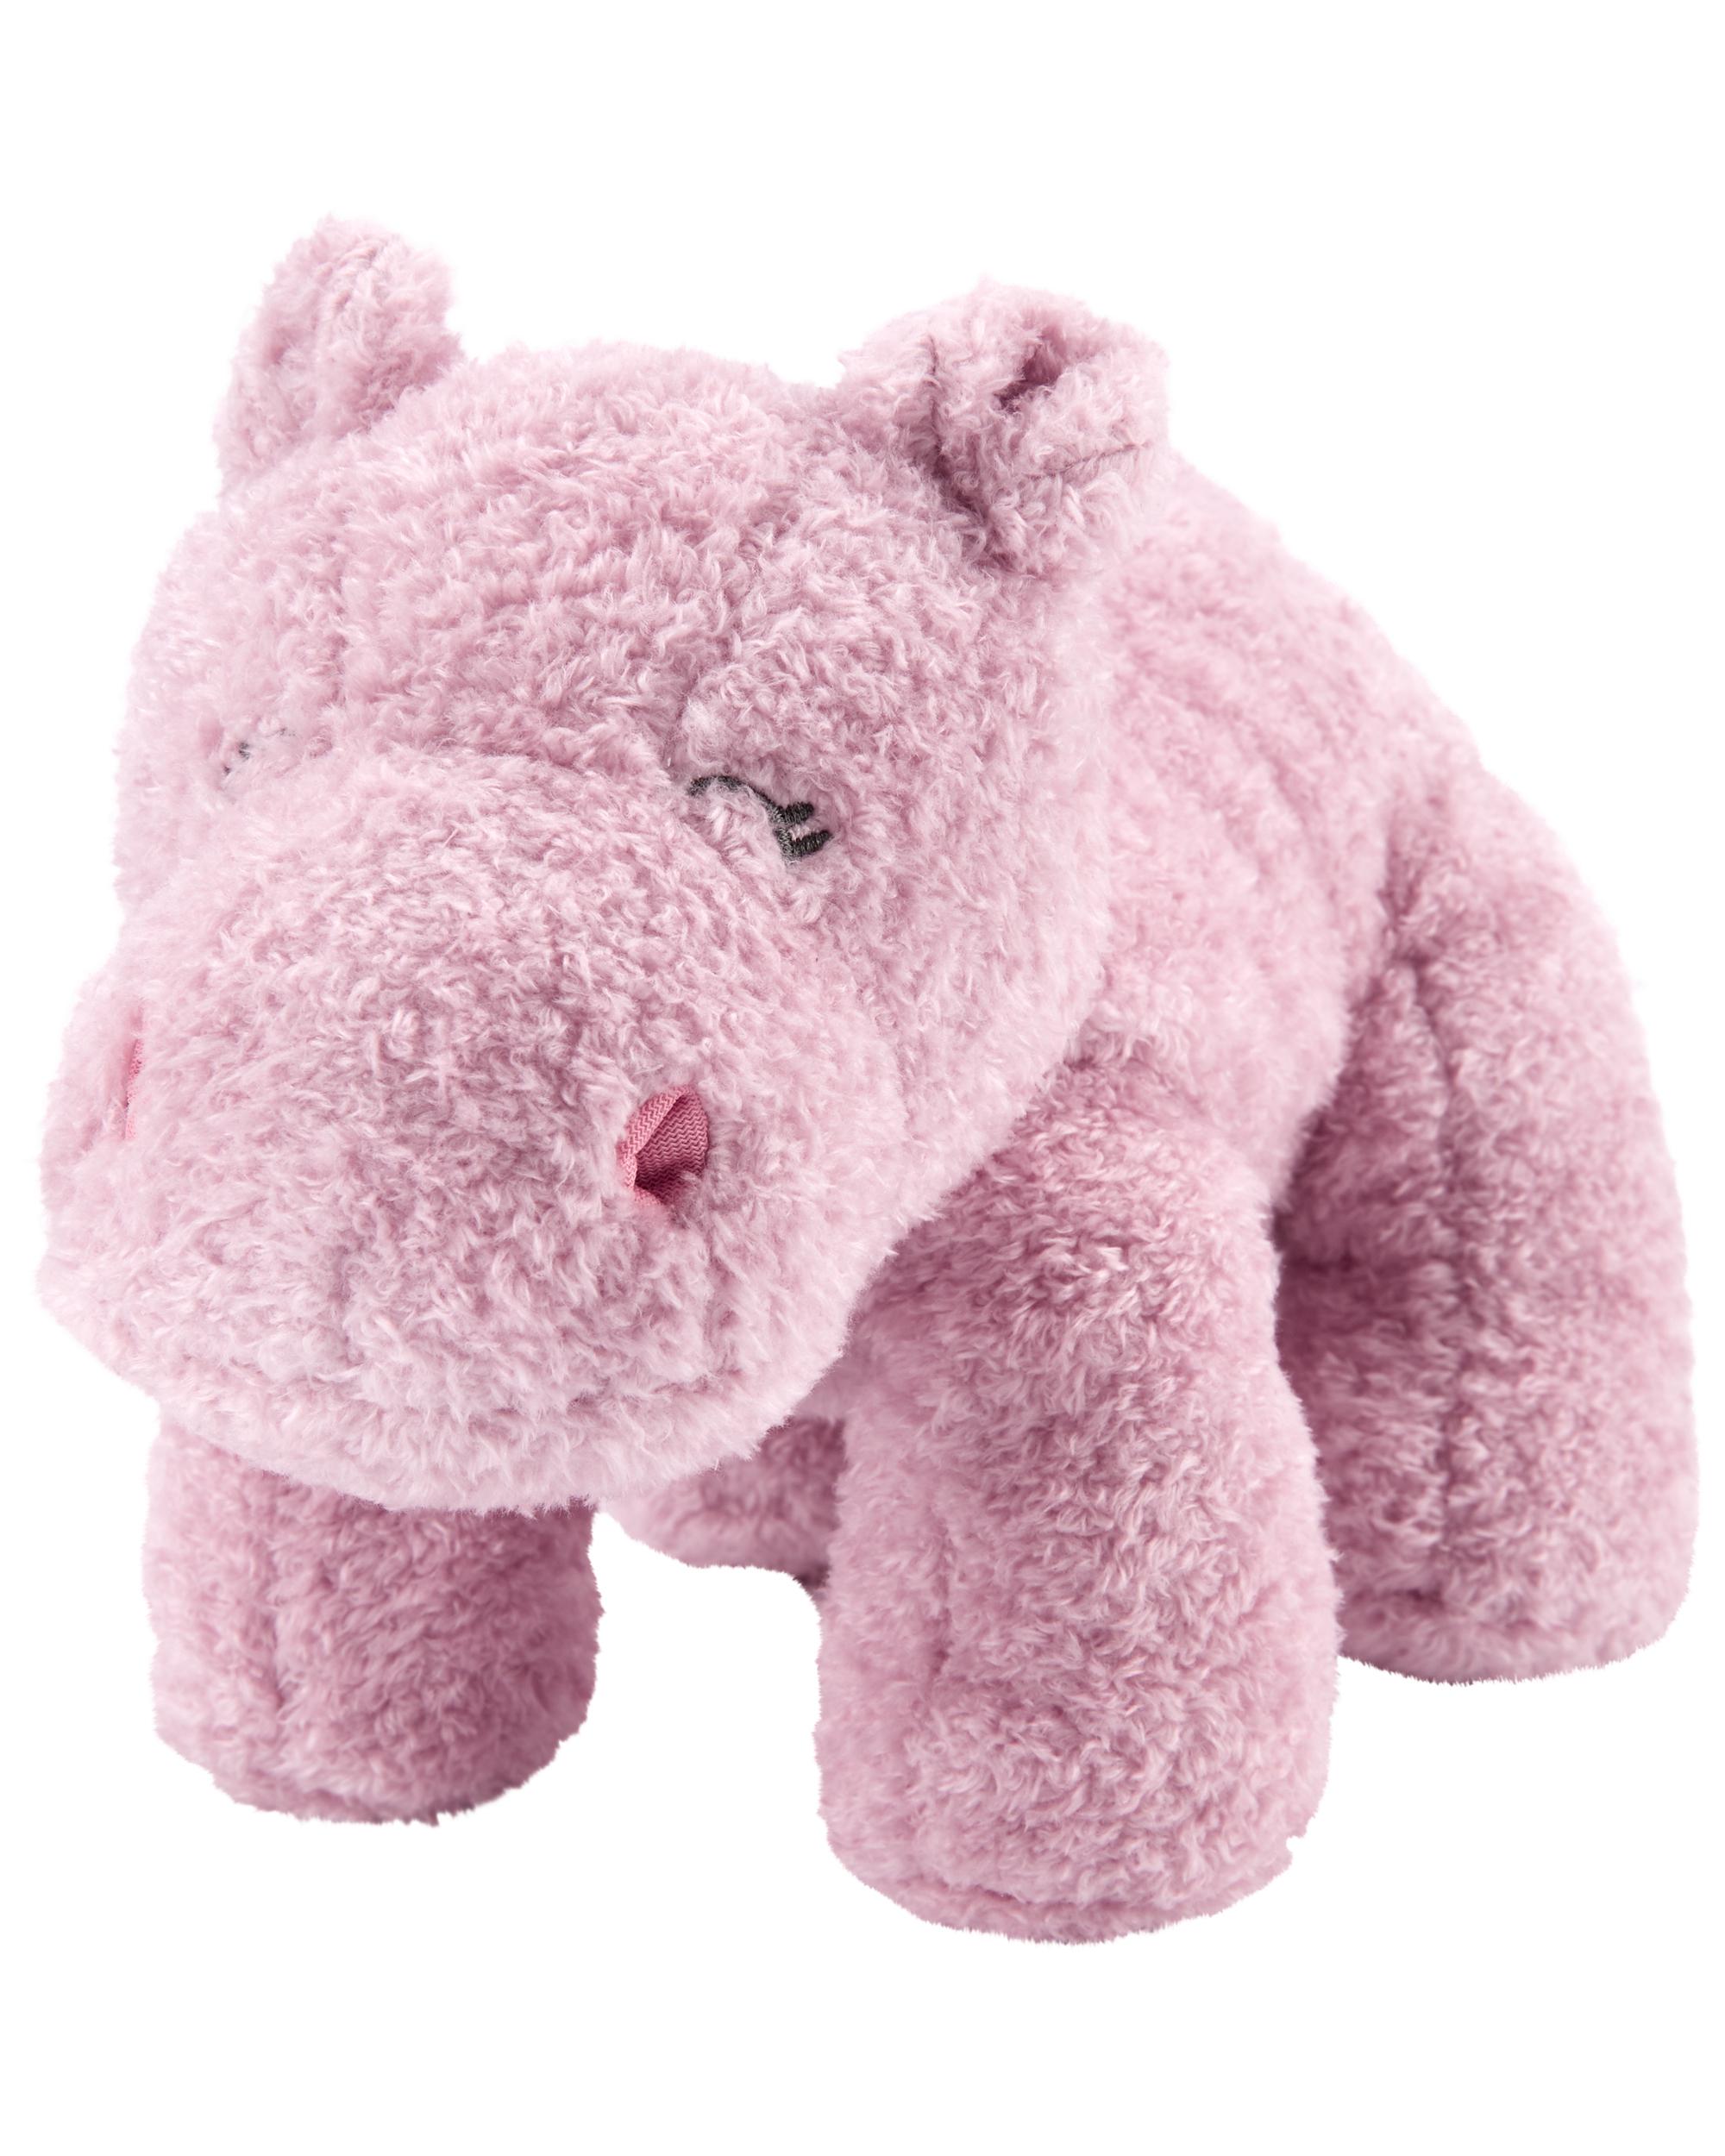 Hippo Plush Stuffed Animal